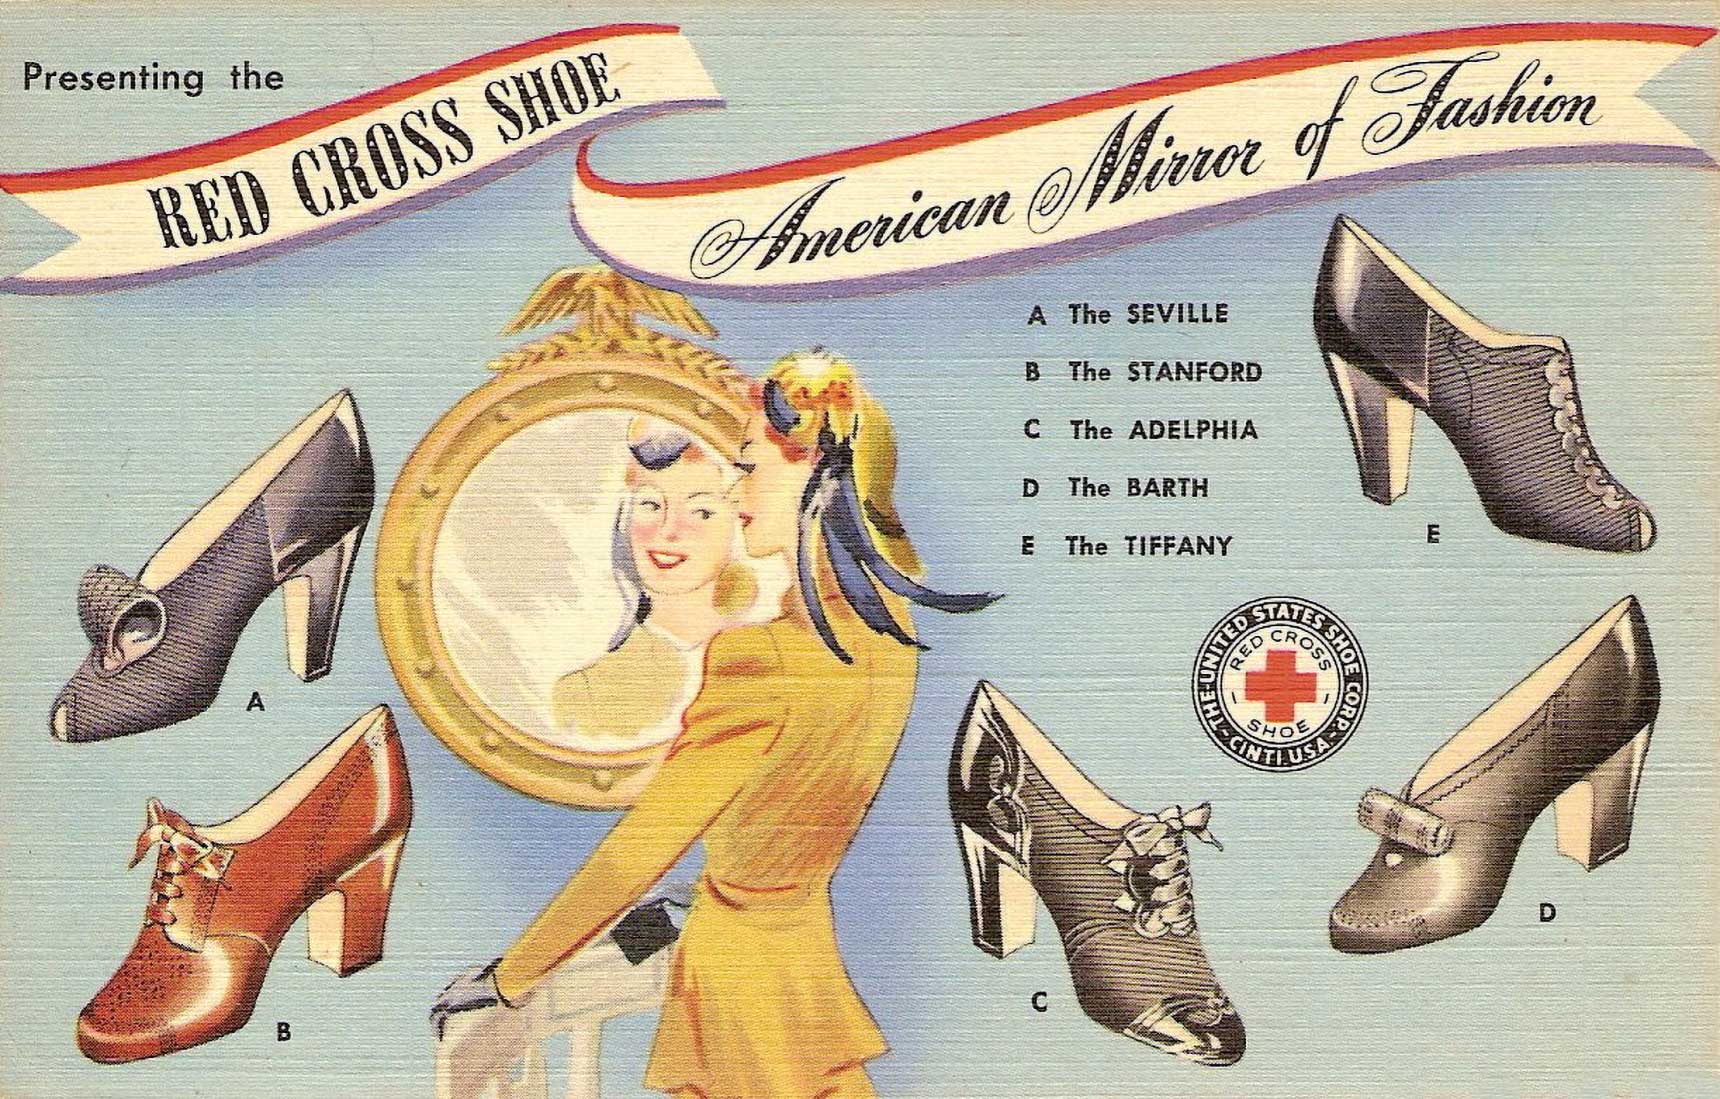 Figure 5: Presenting the Red Cross Shoe, postcard, 1942. Image from: cincinnativiews.net